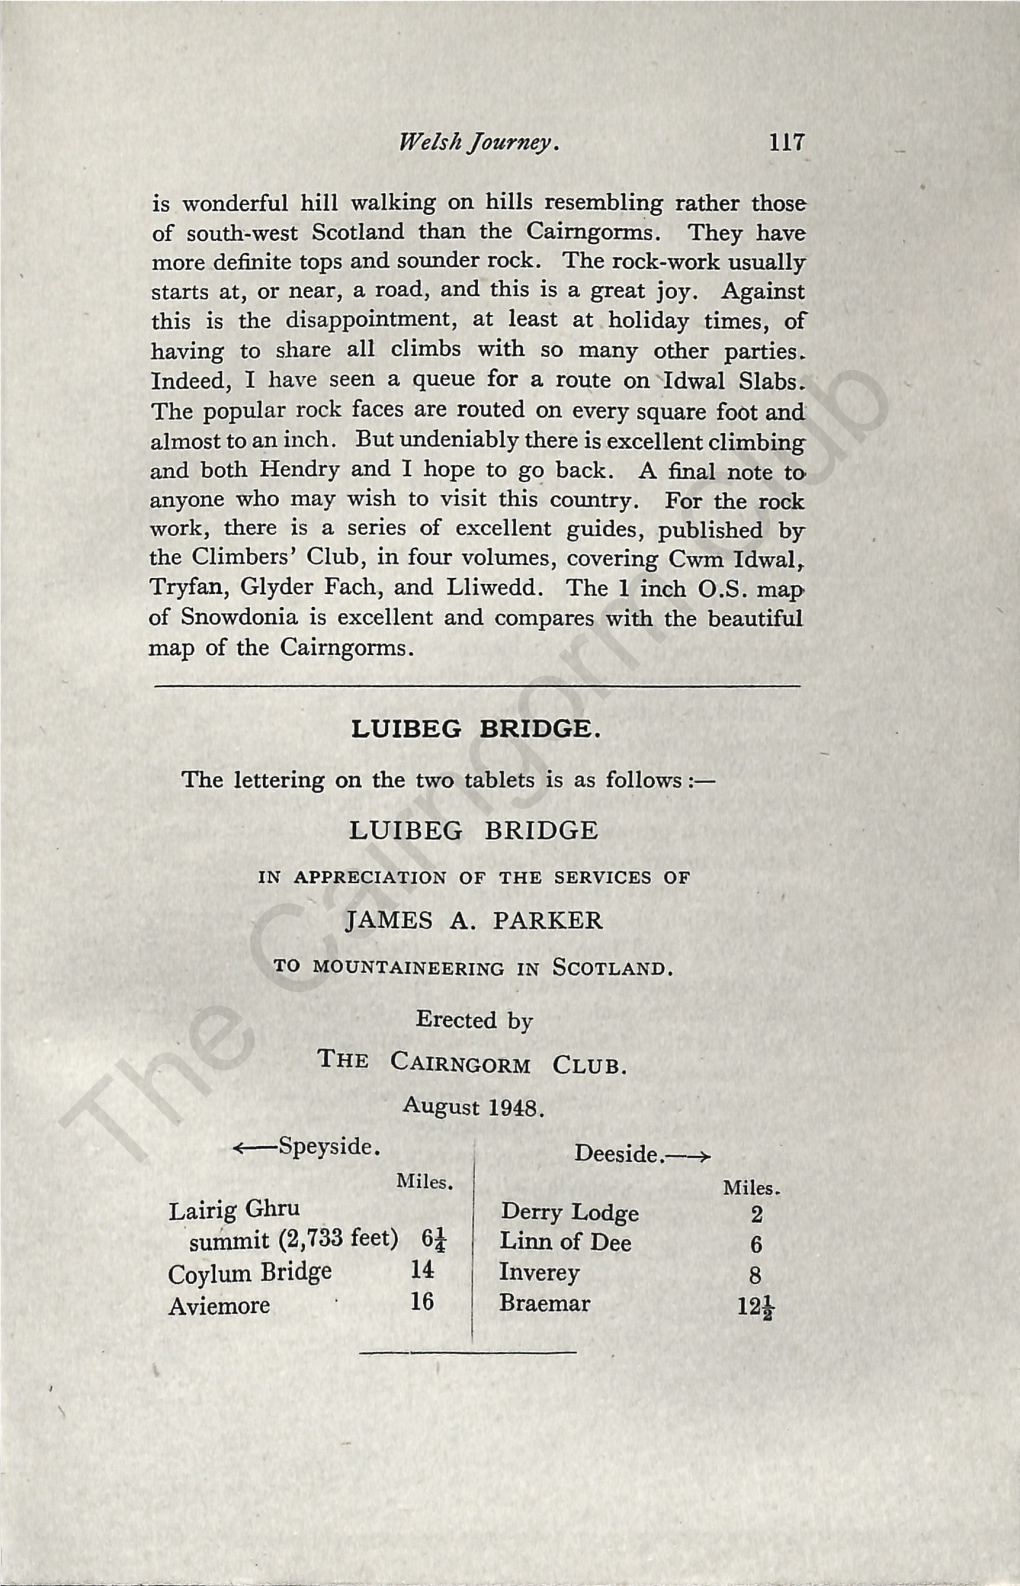 The Cairngorm Club Journal 086, 1948-1949